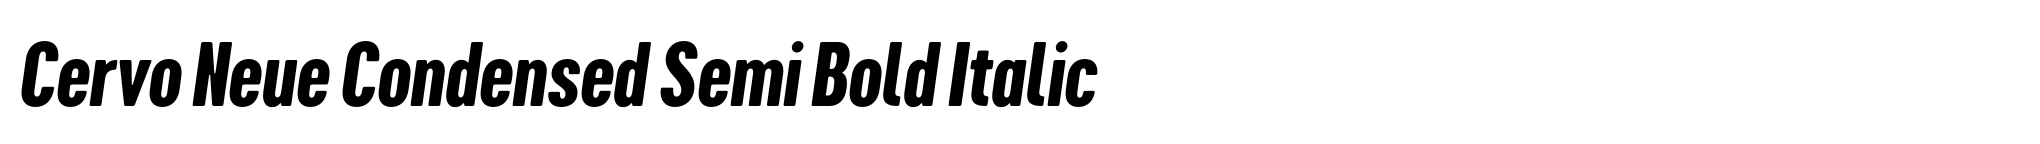 Cervo Neue Condensed Semi Bold Italic image